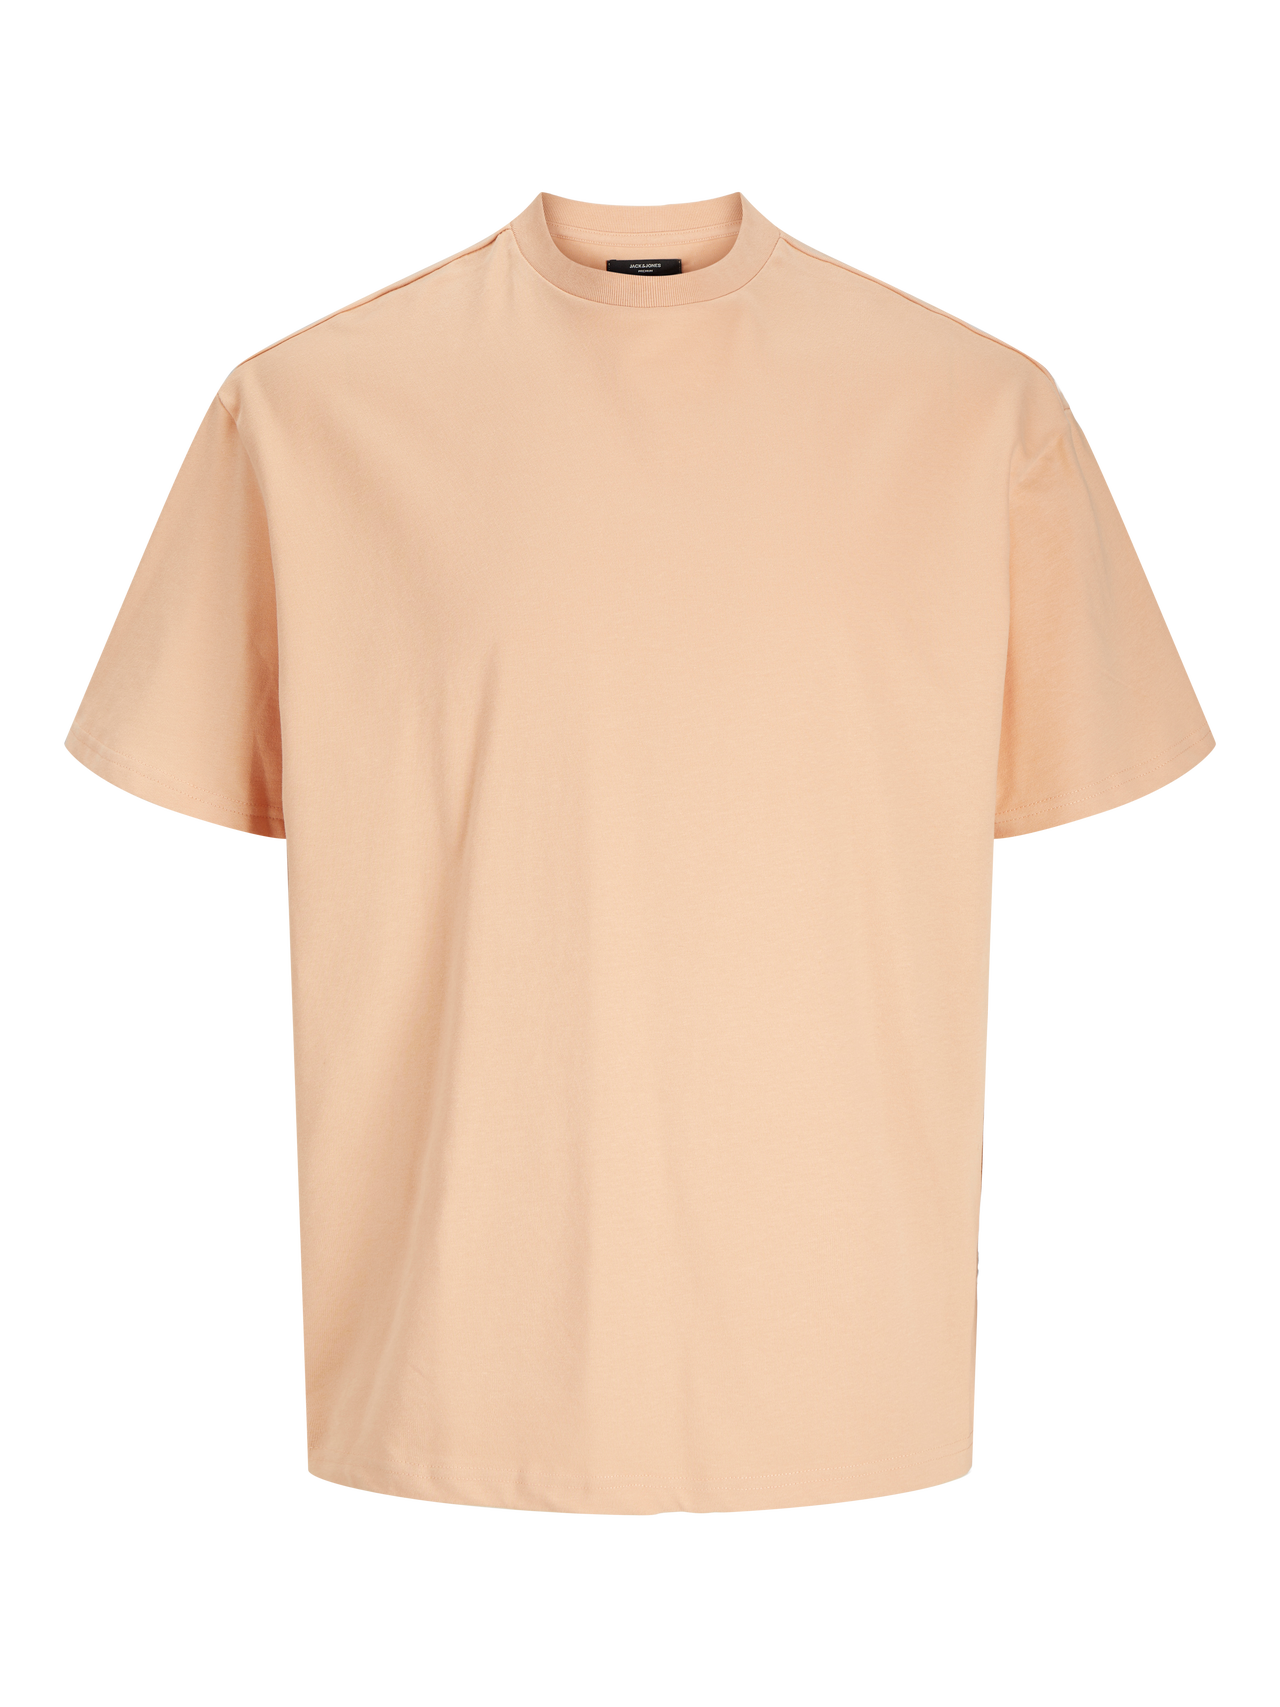 Jack & Jones T-shirt Liso Decote Redondo -Peach Nougat  - 12255176